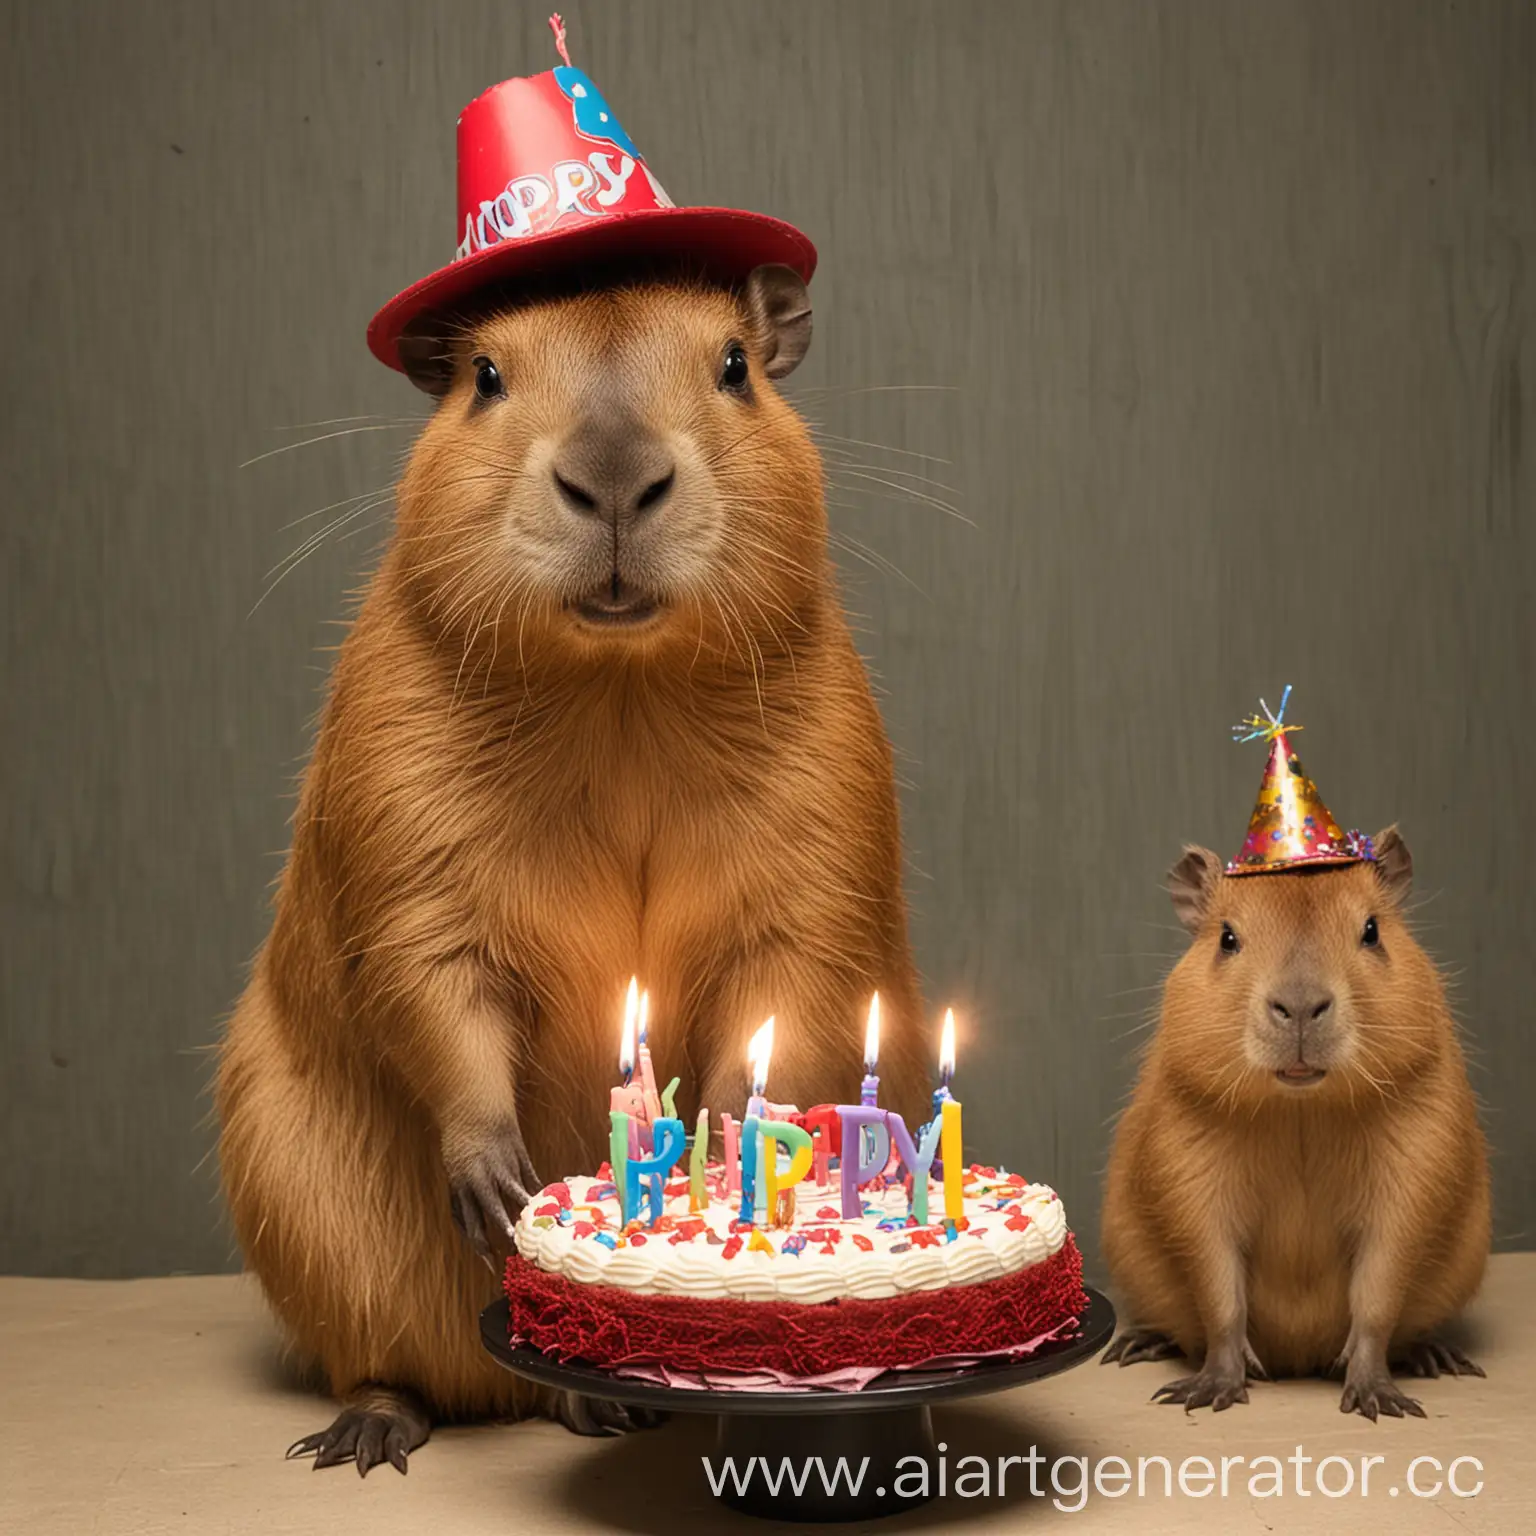 Capybara-and-Rapper-Celebrate-Birthday-Party